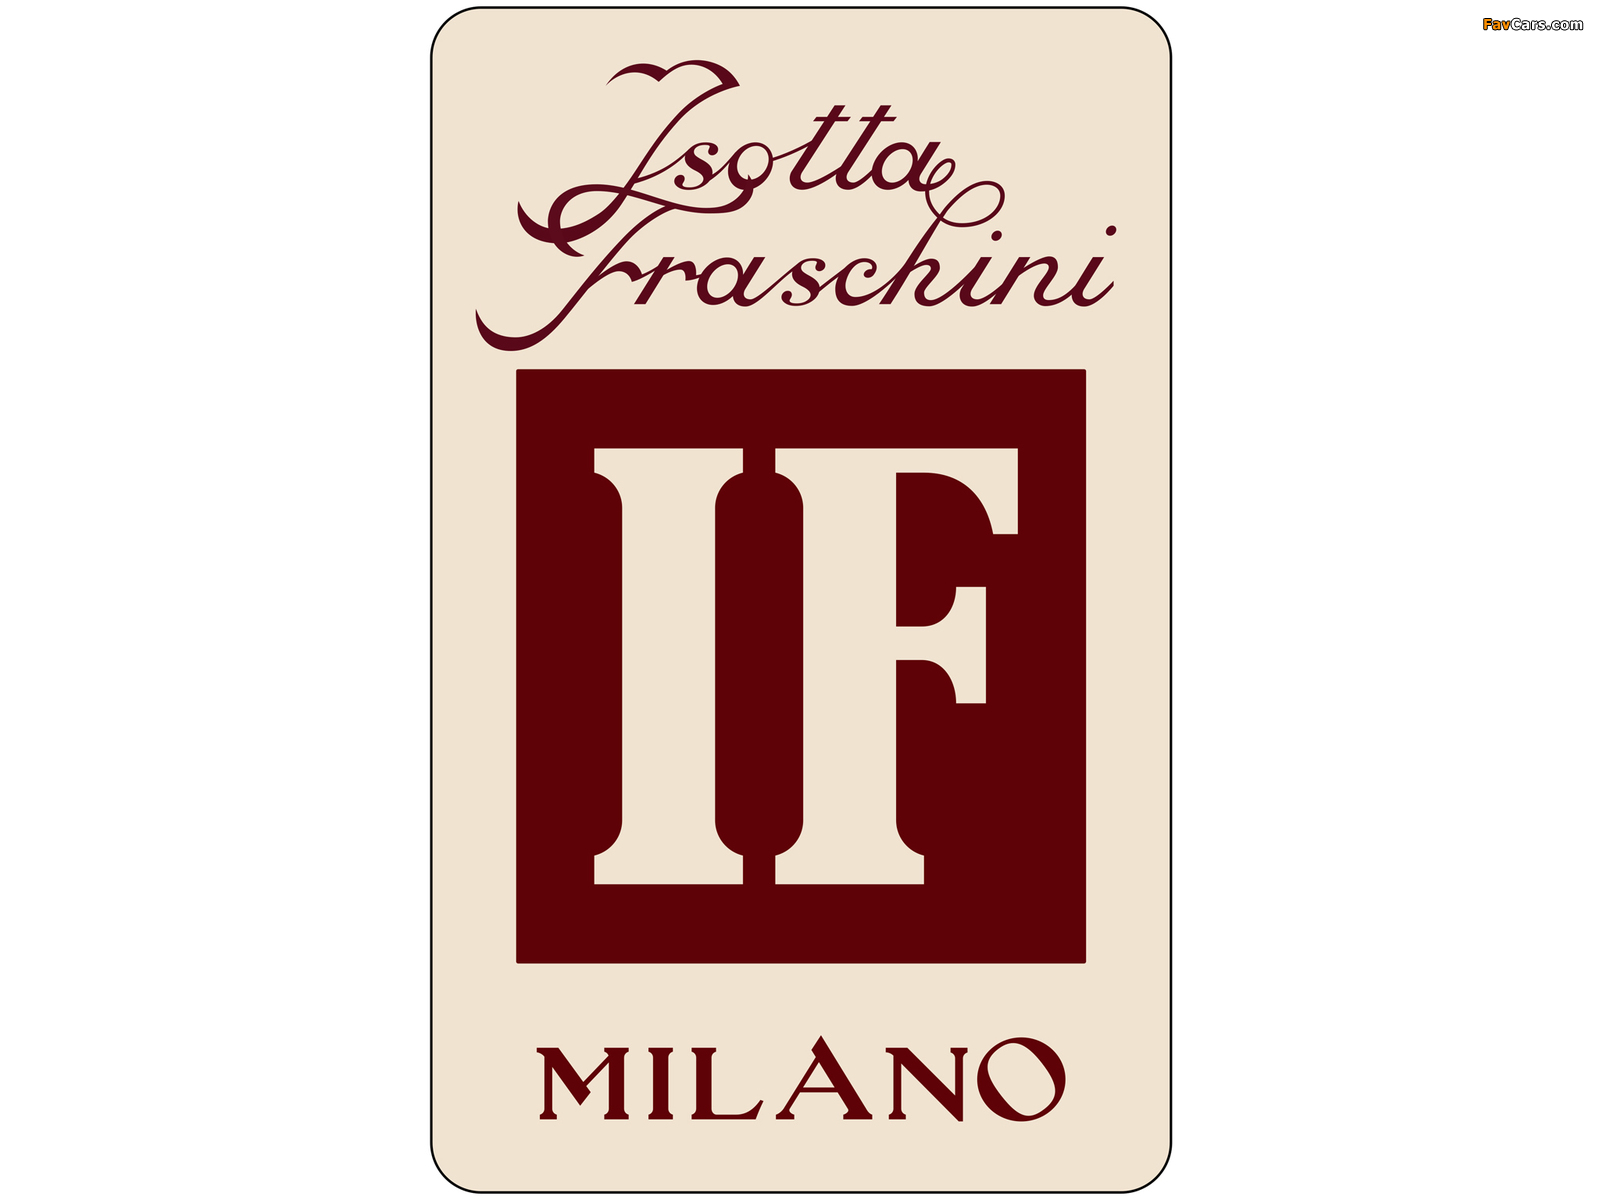 Isotta-Fraschini photos (1600 x 1200)